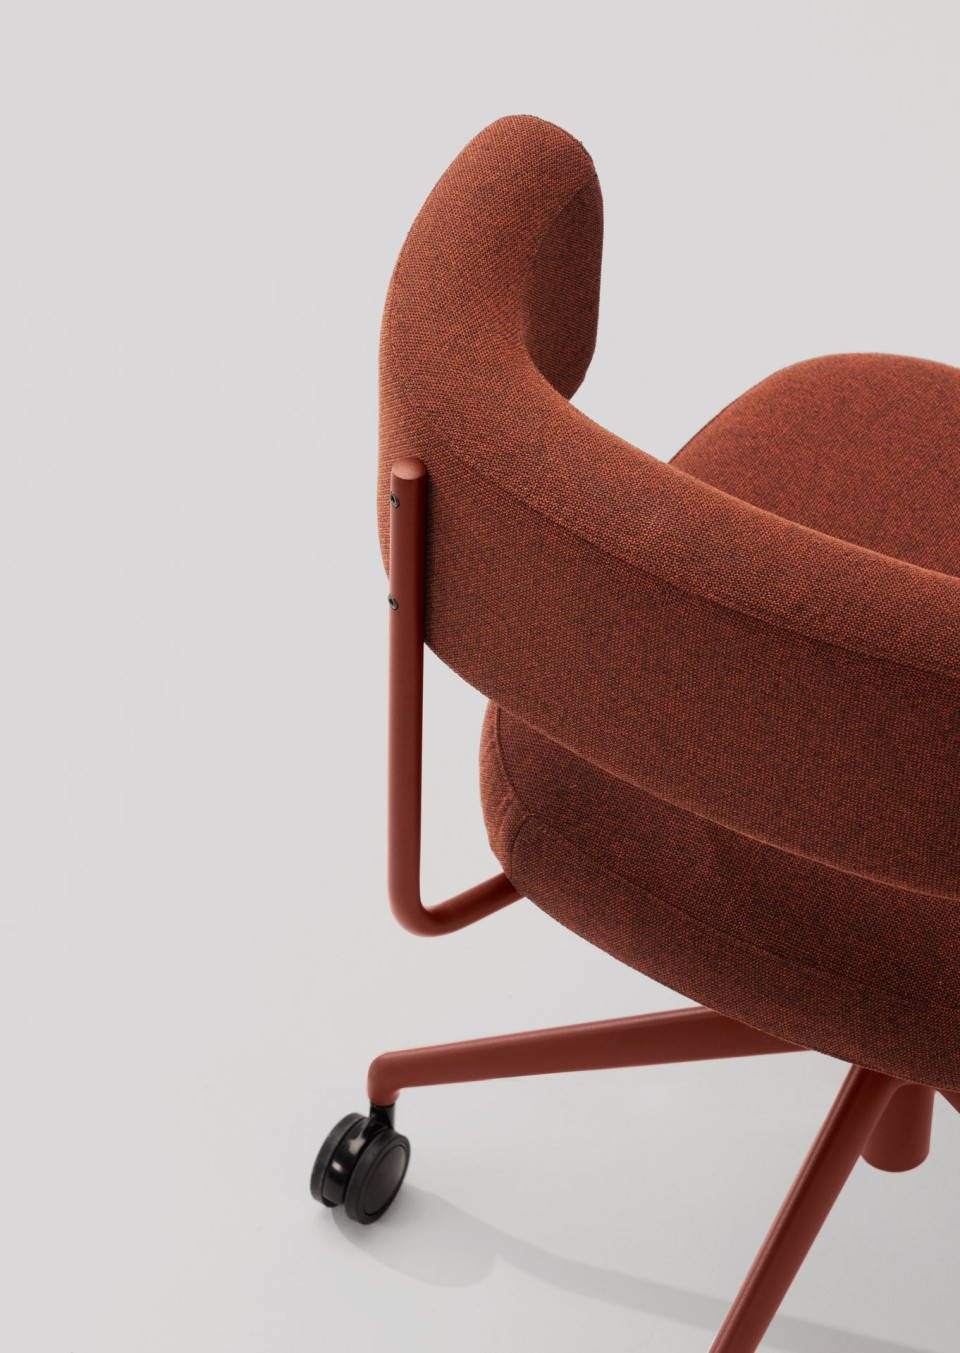 Amelie office chair design MIDJ